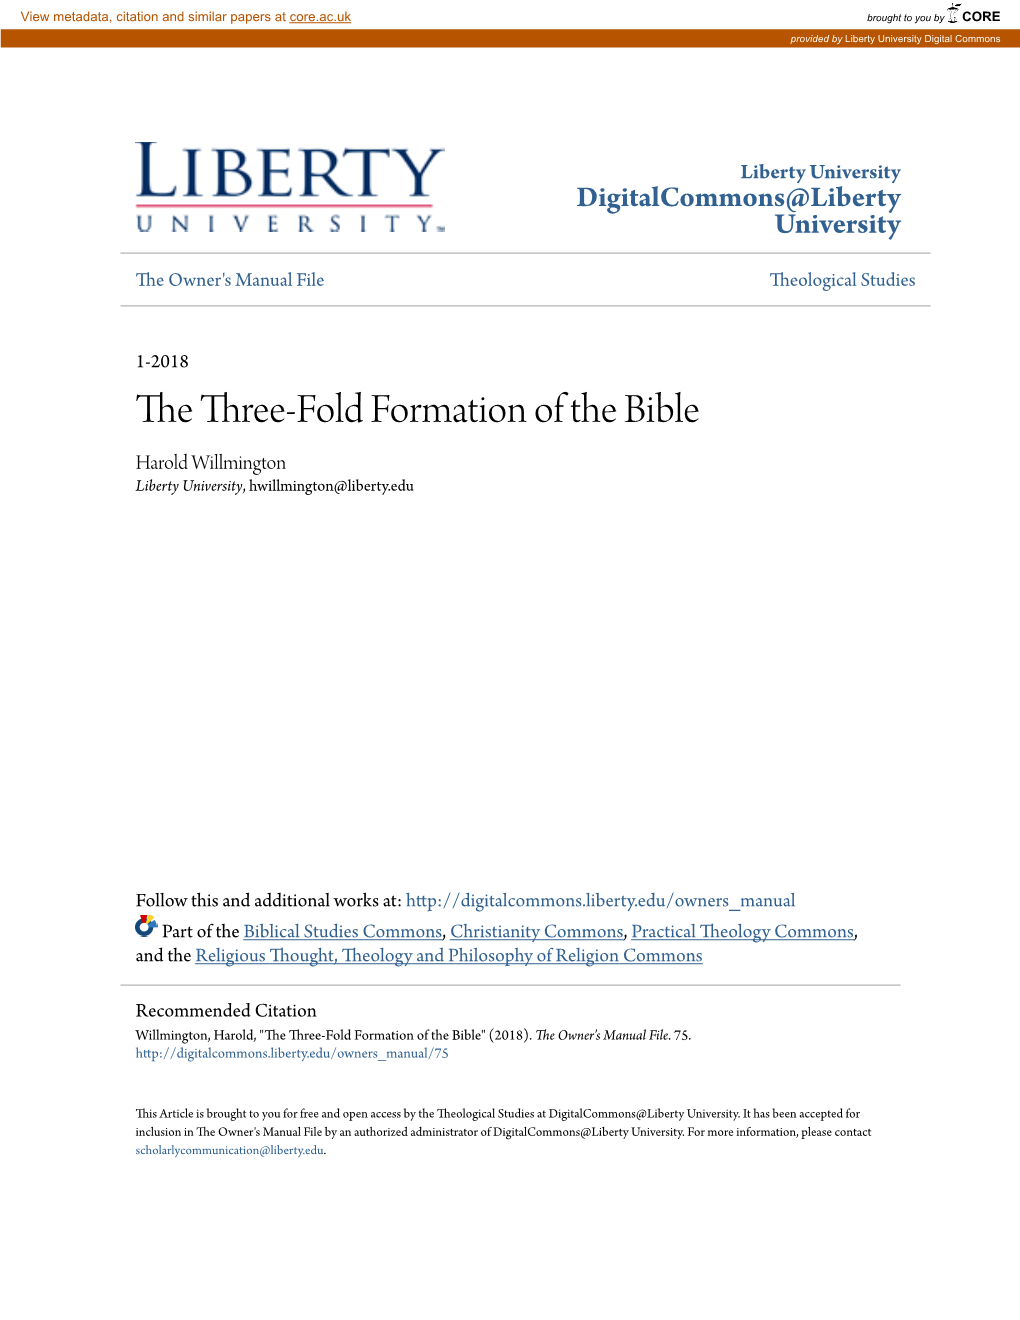 The Three-Fold Formation of the Bible Harold Willmington Liberty University, Hwillmington@Liberty.Edu